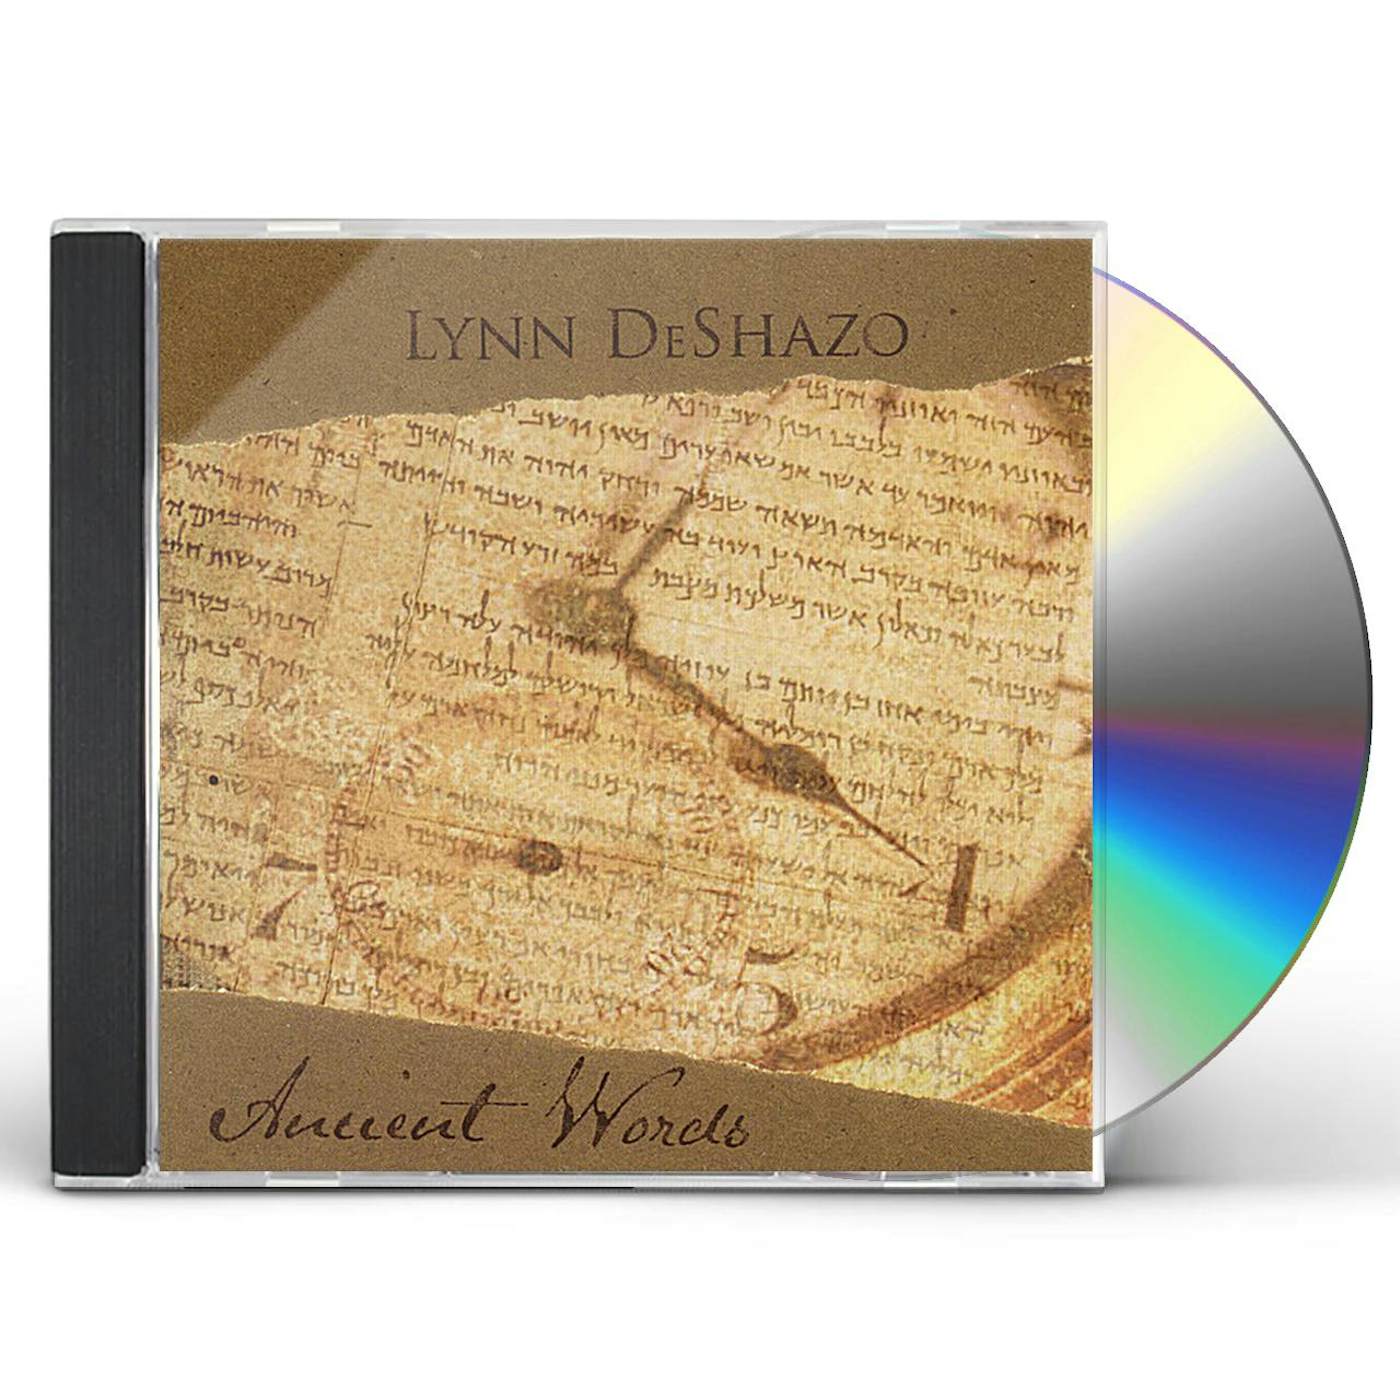 Lynn DeShazo ANCIENT WORDS CD